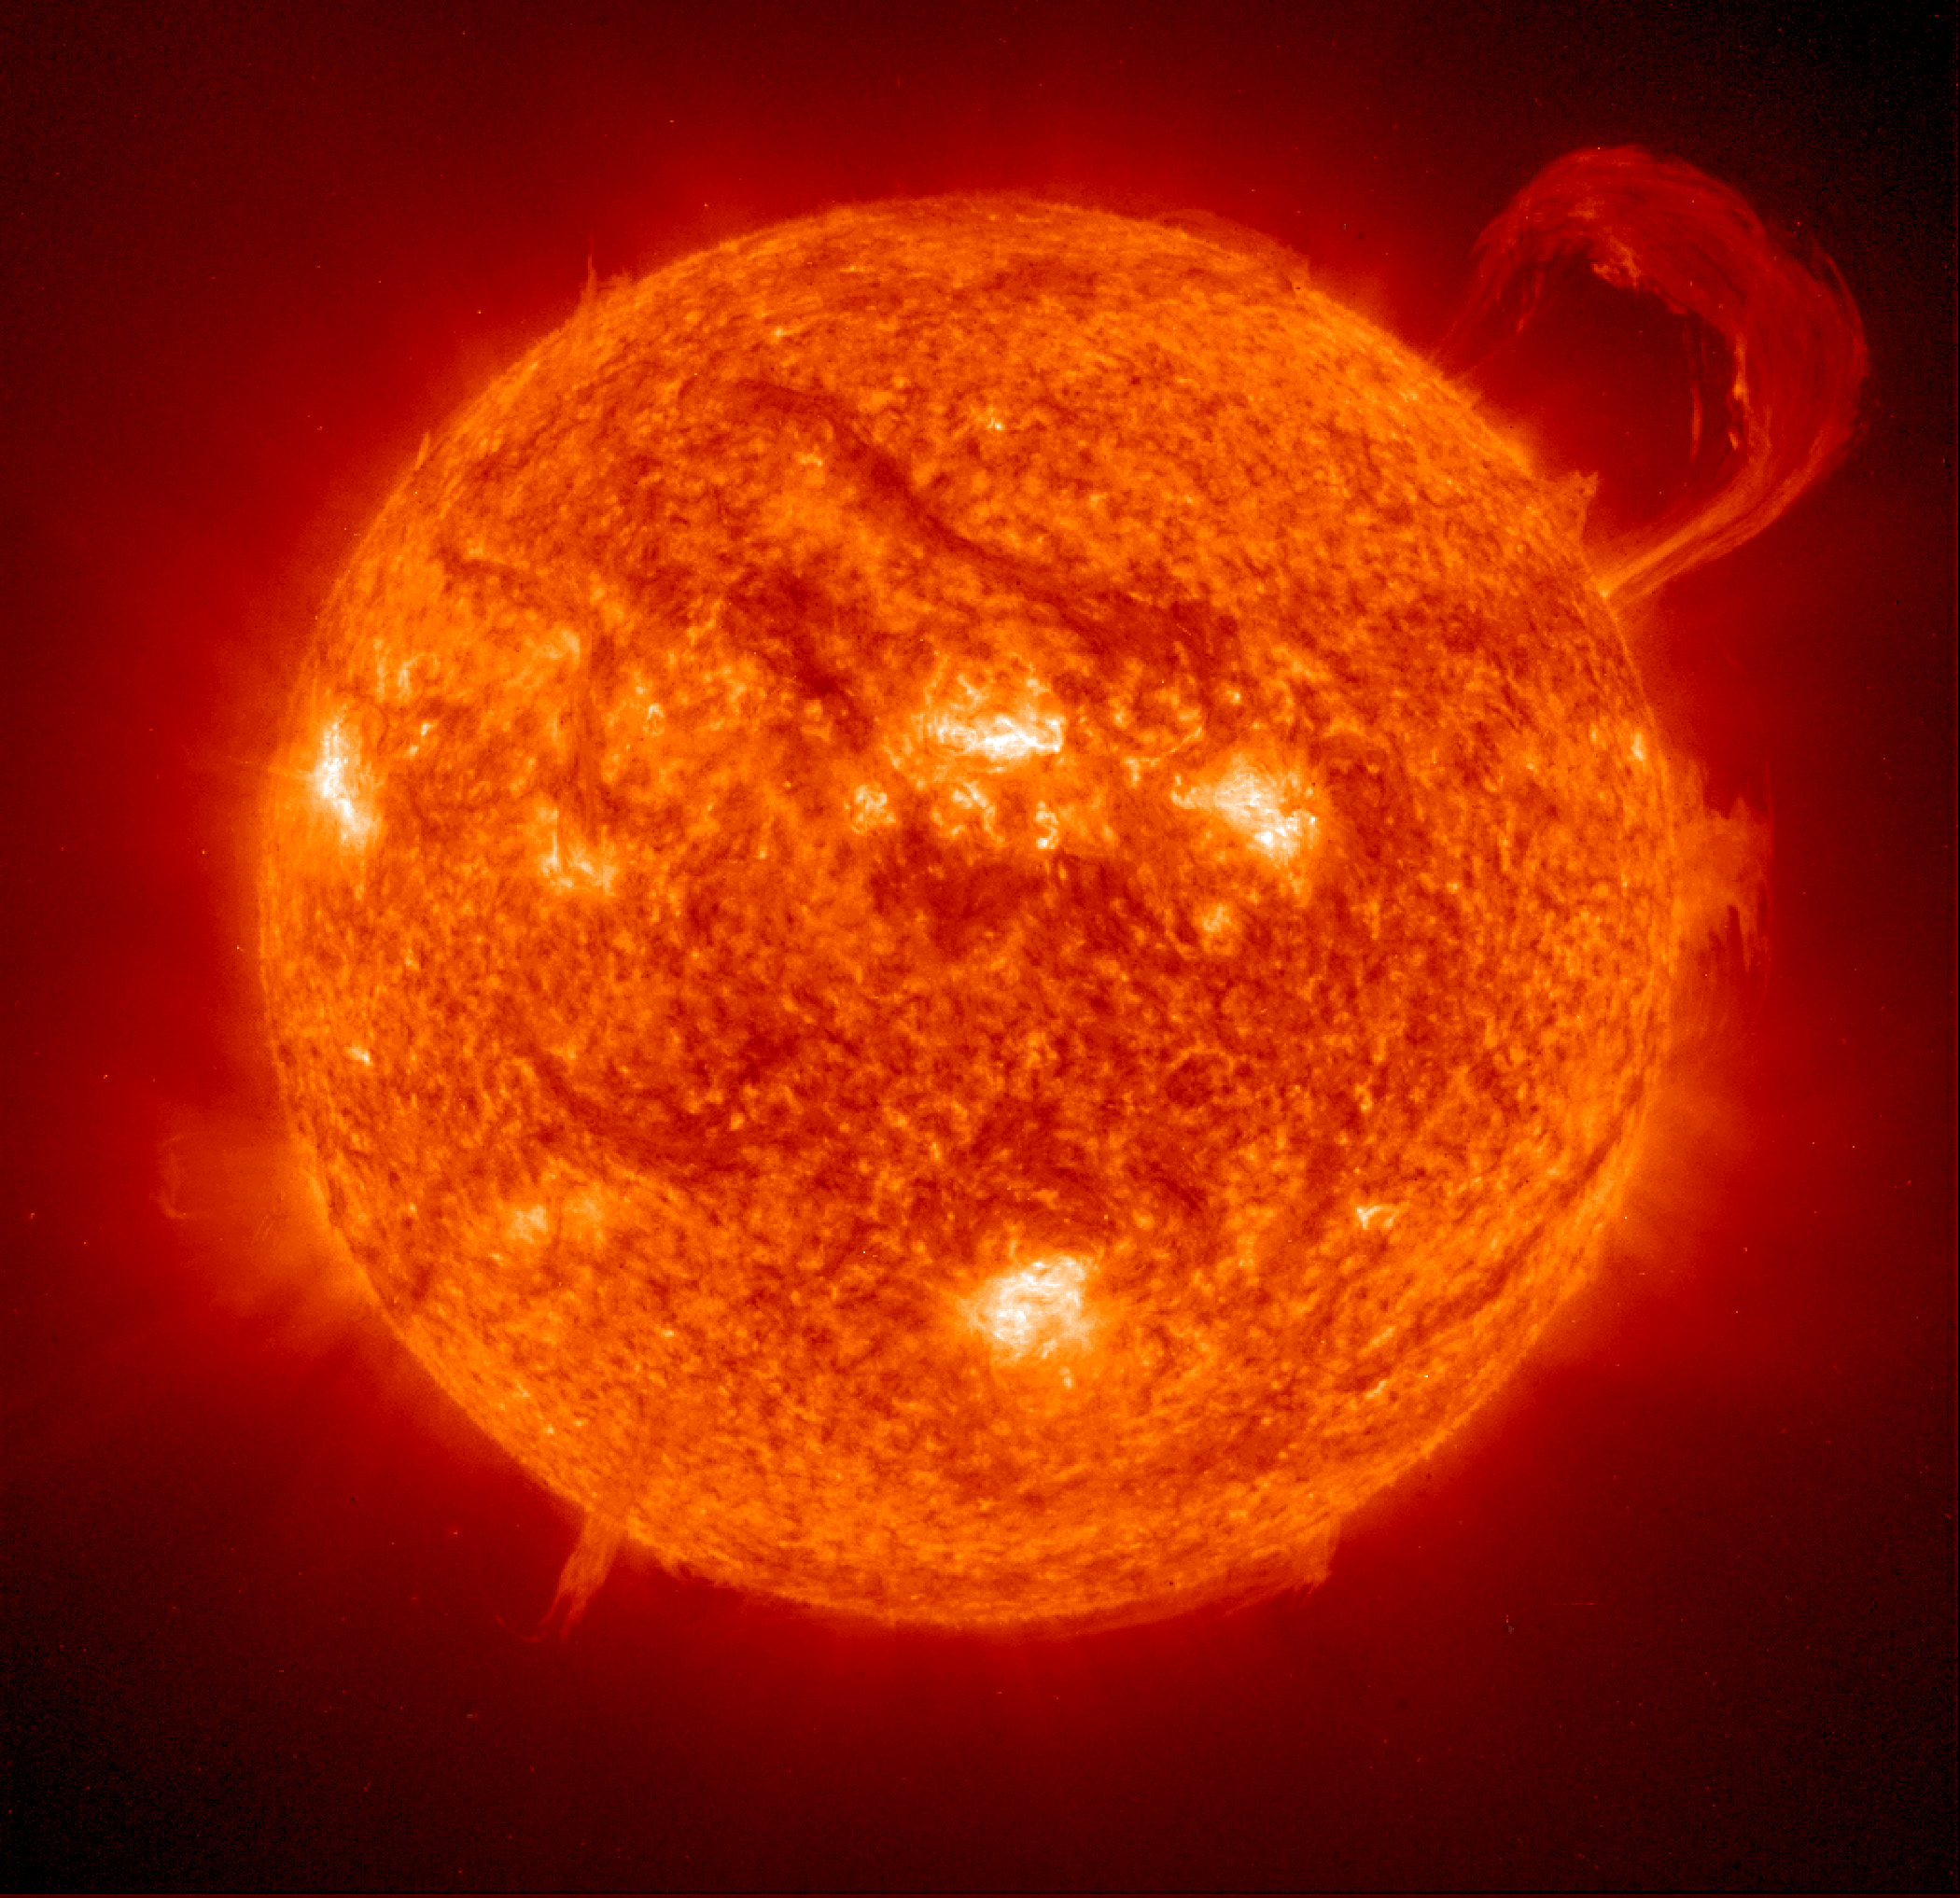 Tendrils of hot plasma stream from the Sun.